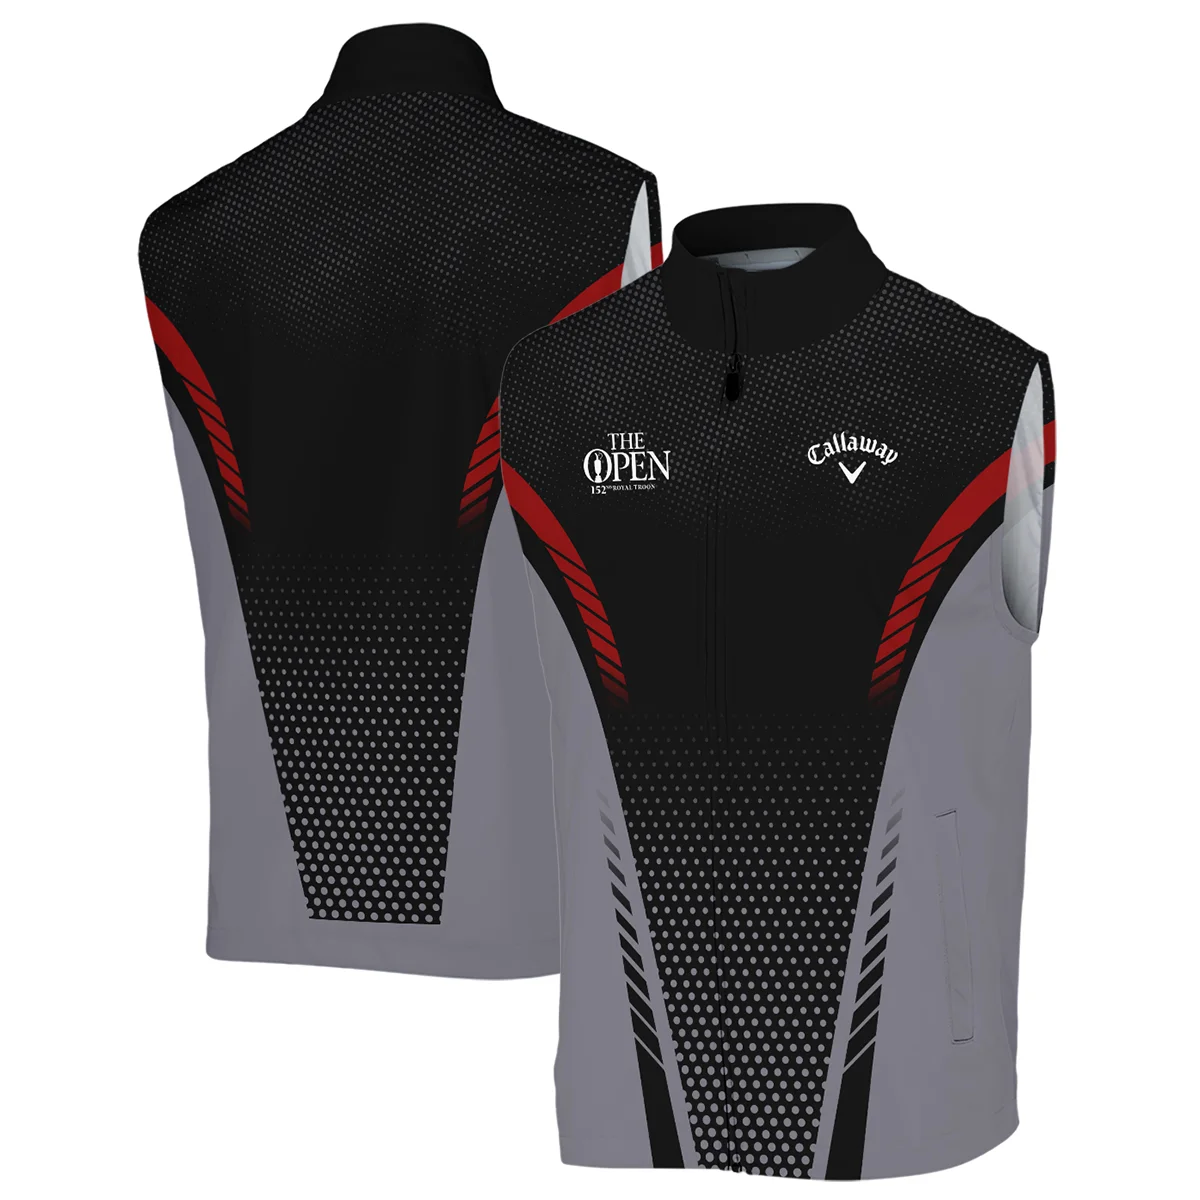 Golf Sport Style 152nd Open Championship Callaway Zipper Polo Shirt All Over Prints QTTOP250624A1CLWZPL